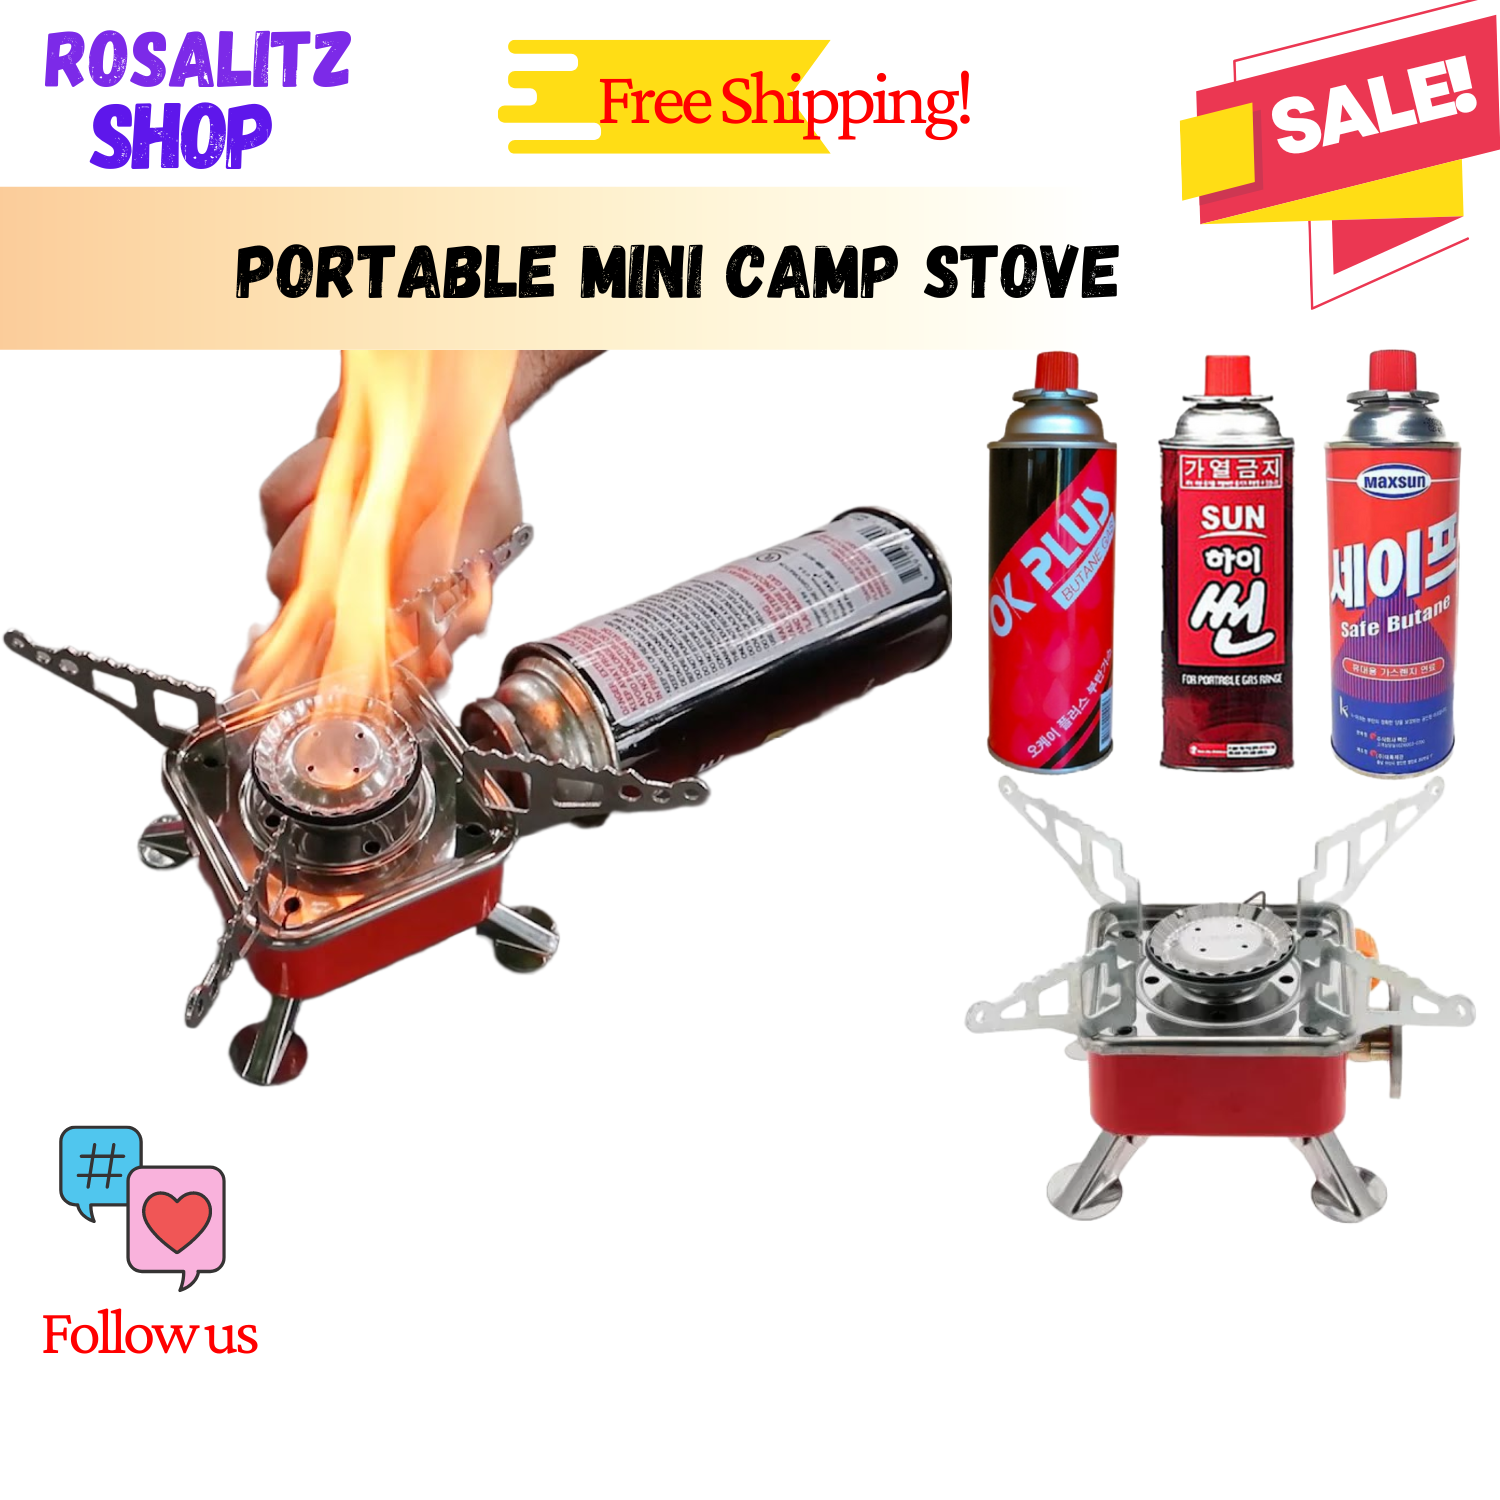 Portable Mini Camp Stove